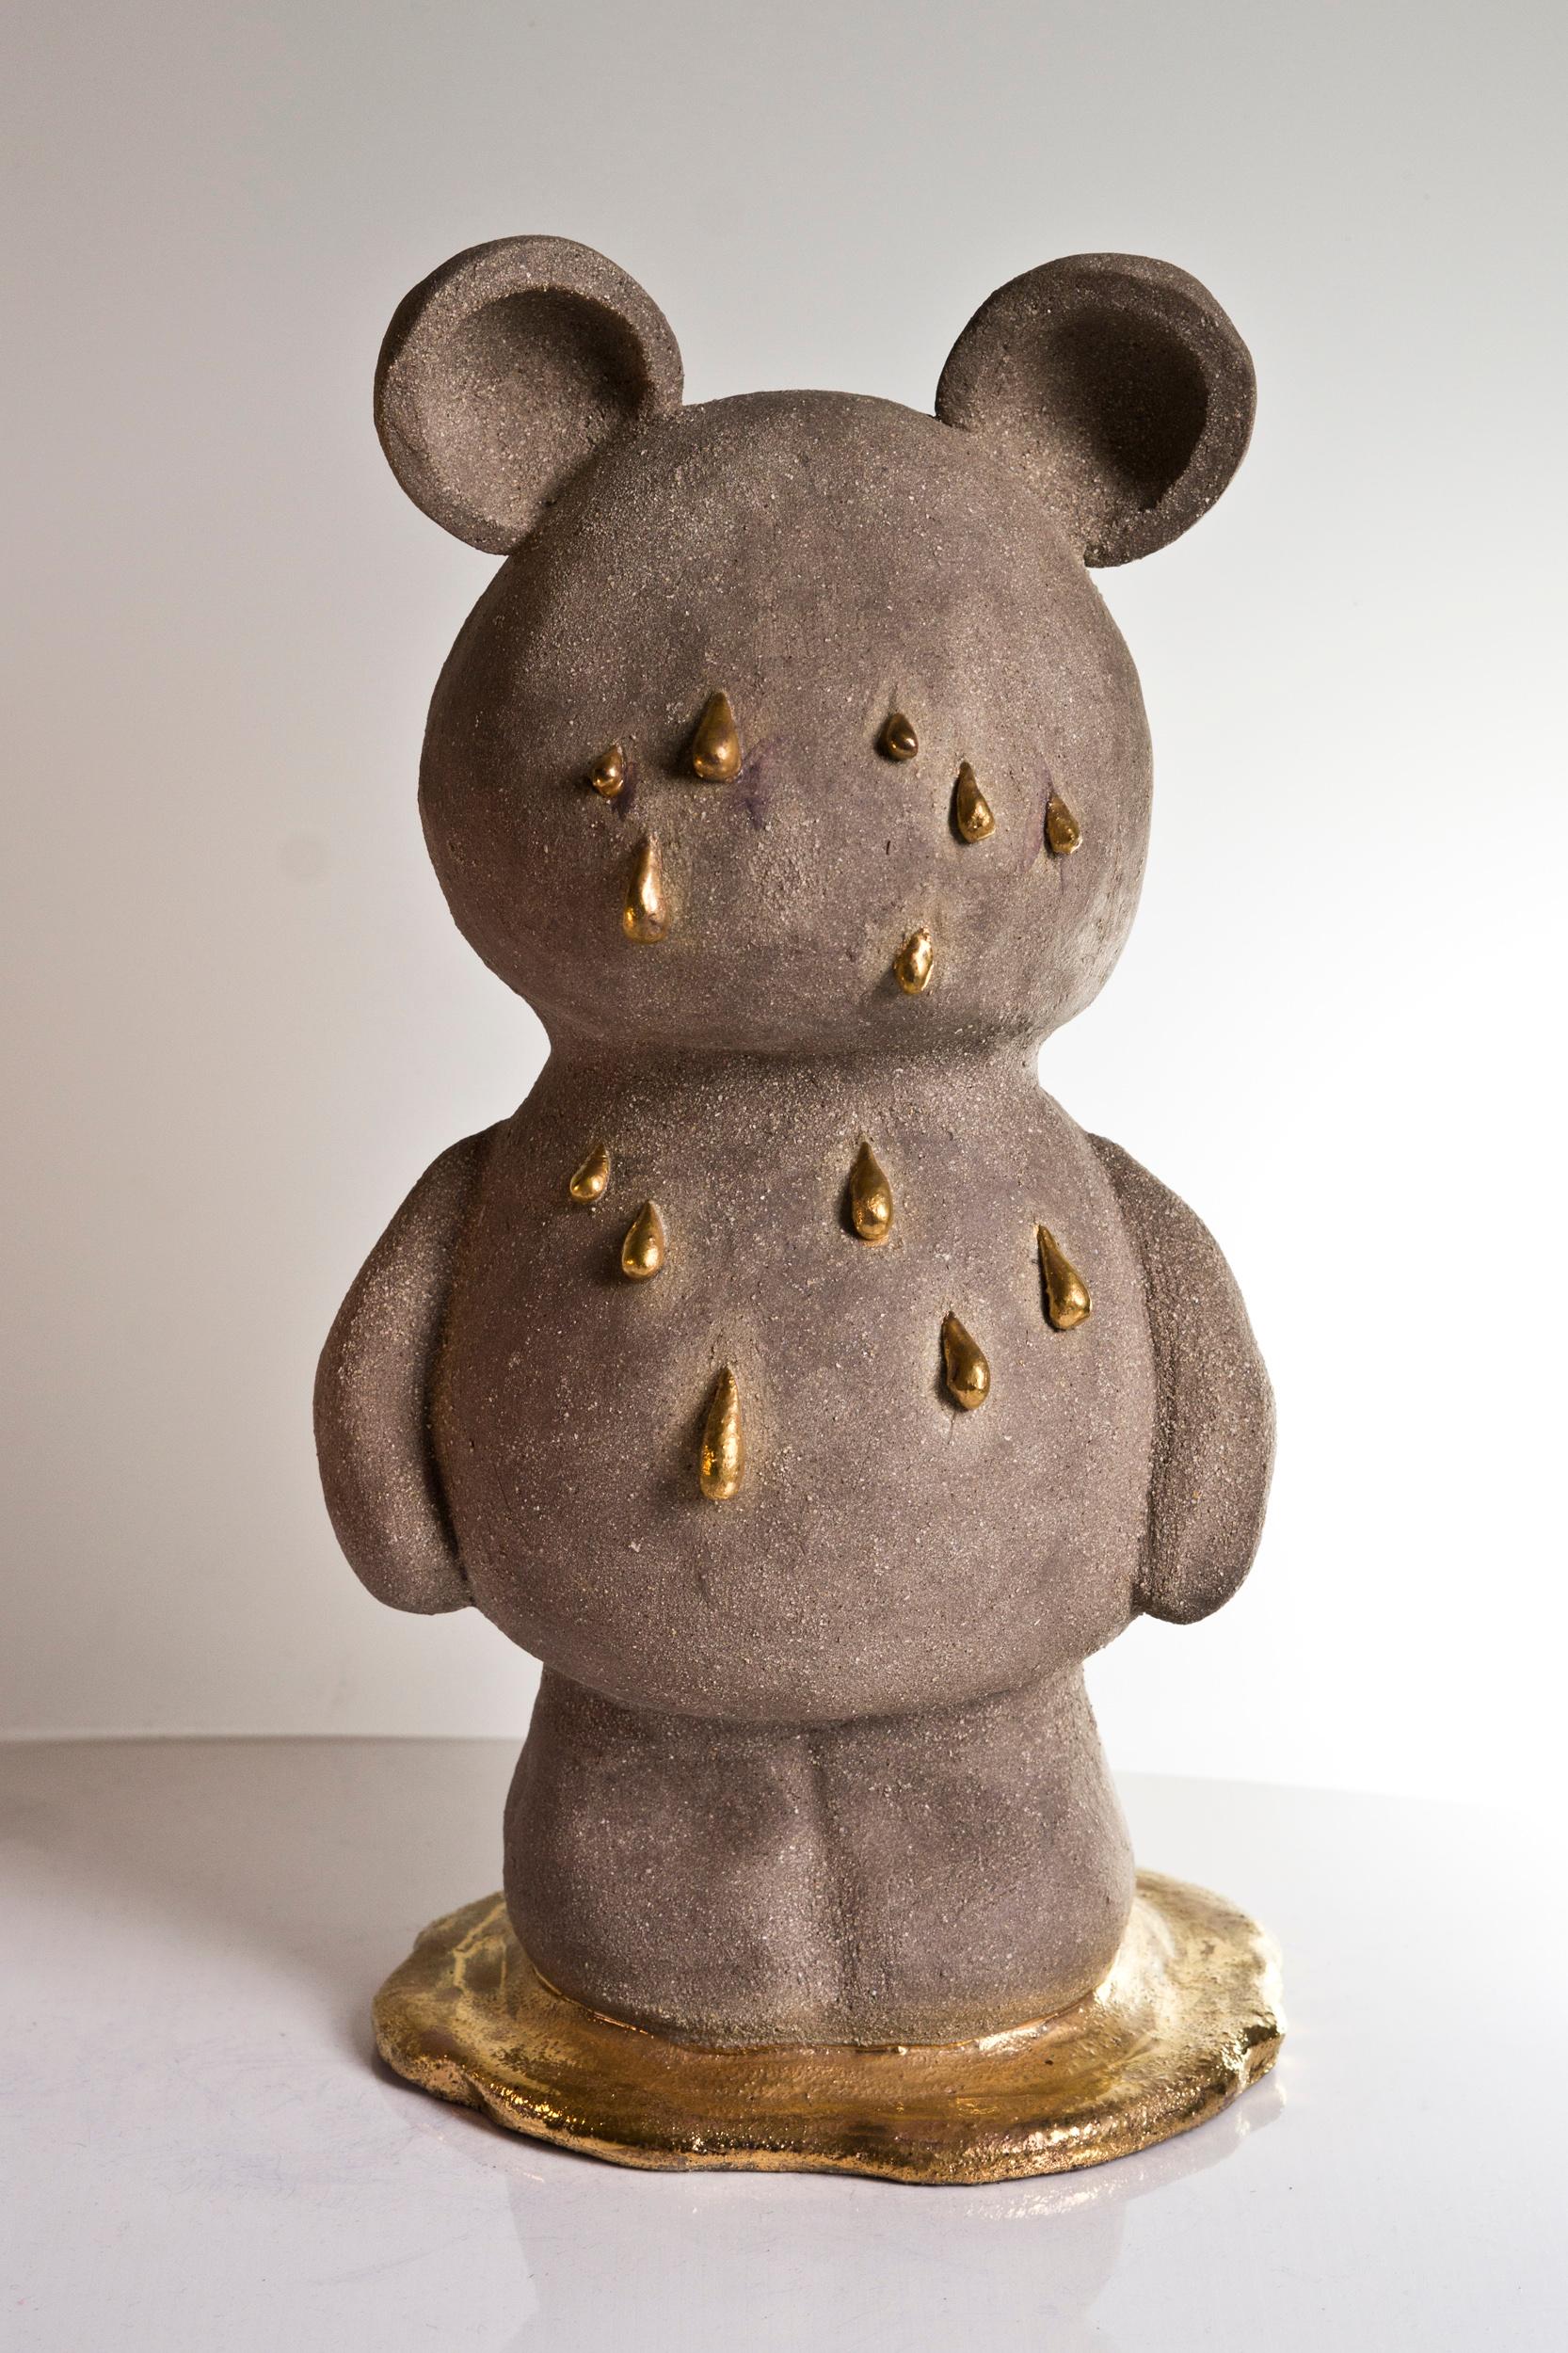 Agustina Garrigou Figurative Sculpture - The Crying Teddy